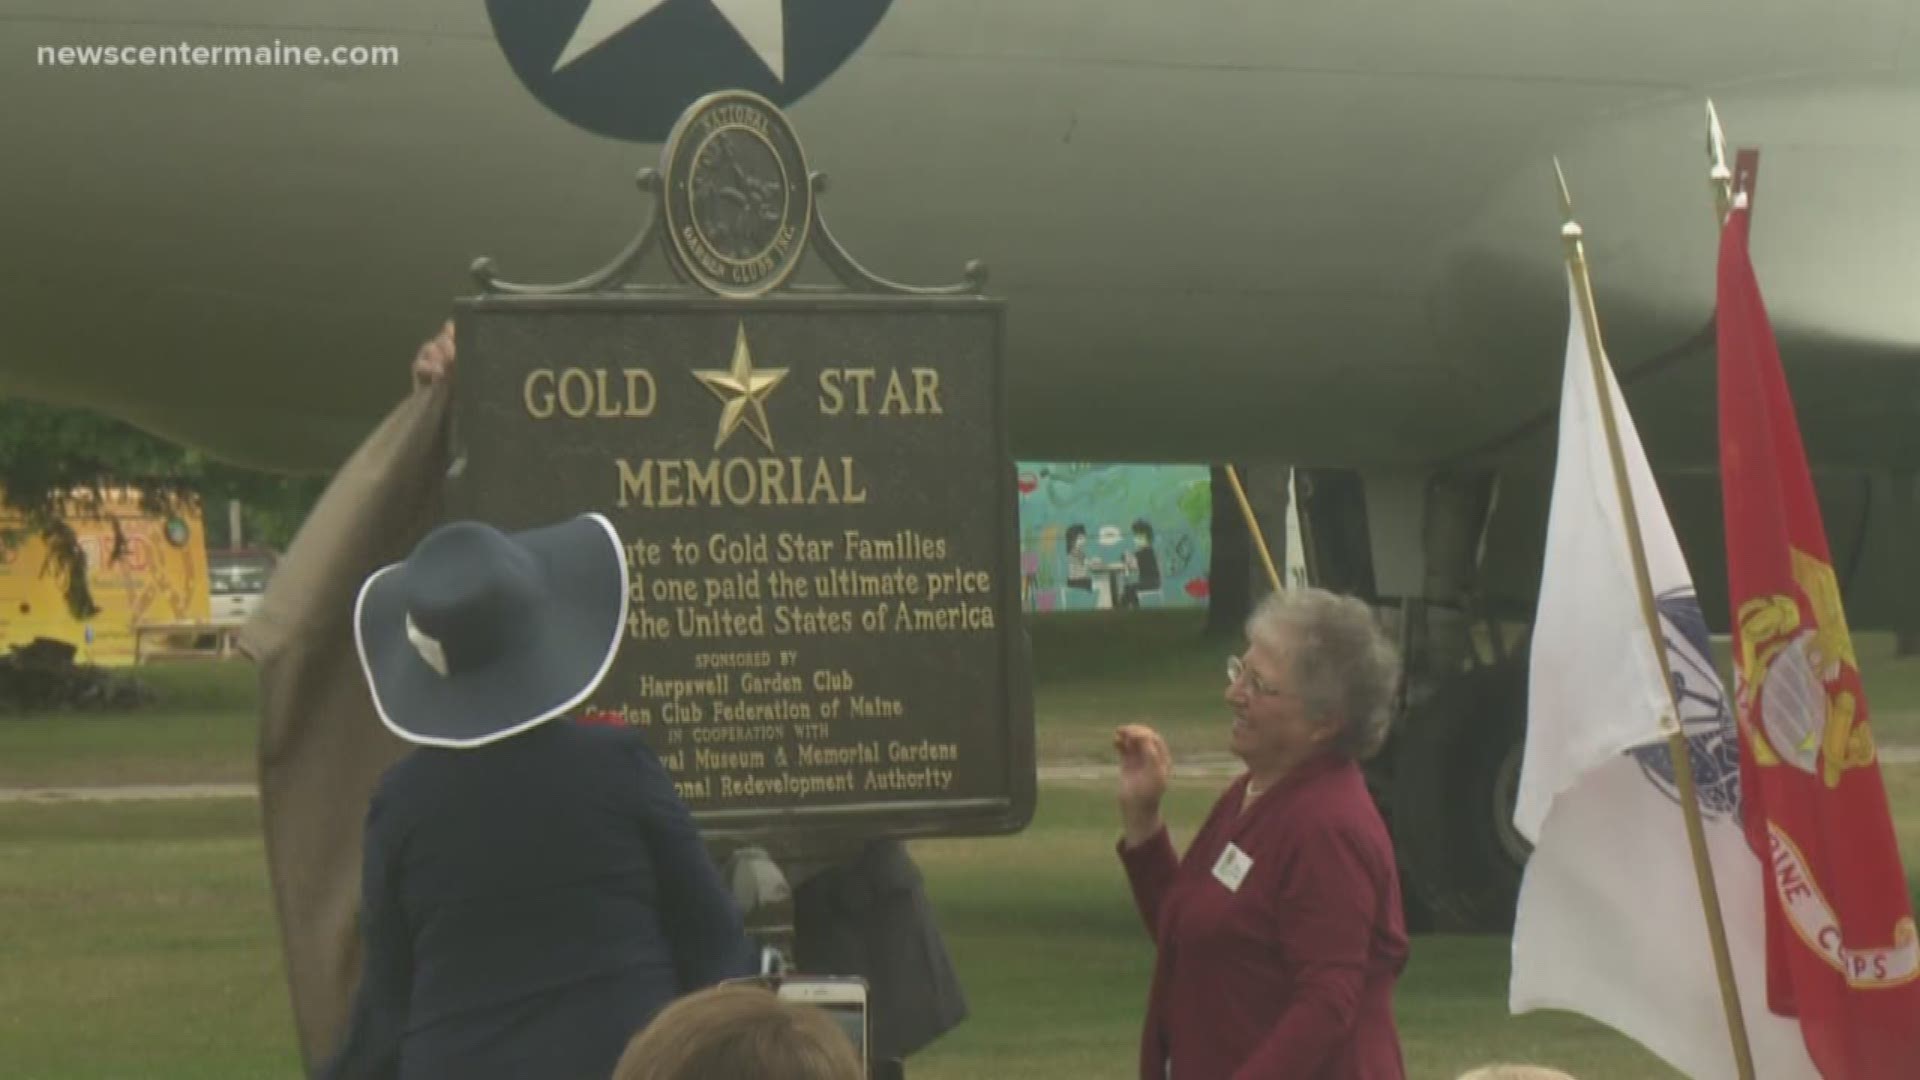 Families of fallen heroes honored at memorial marker